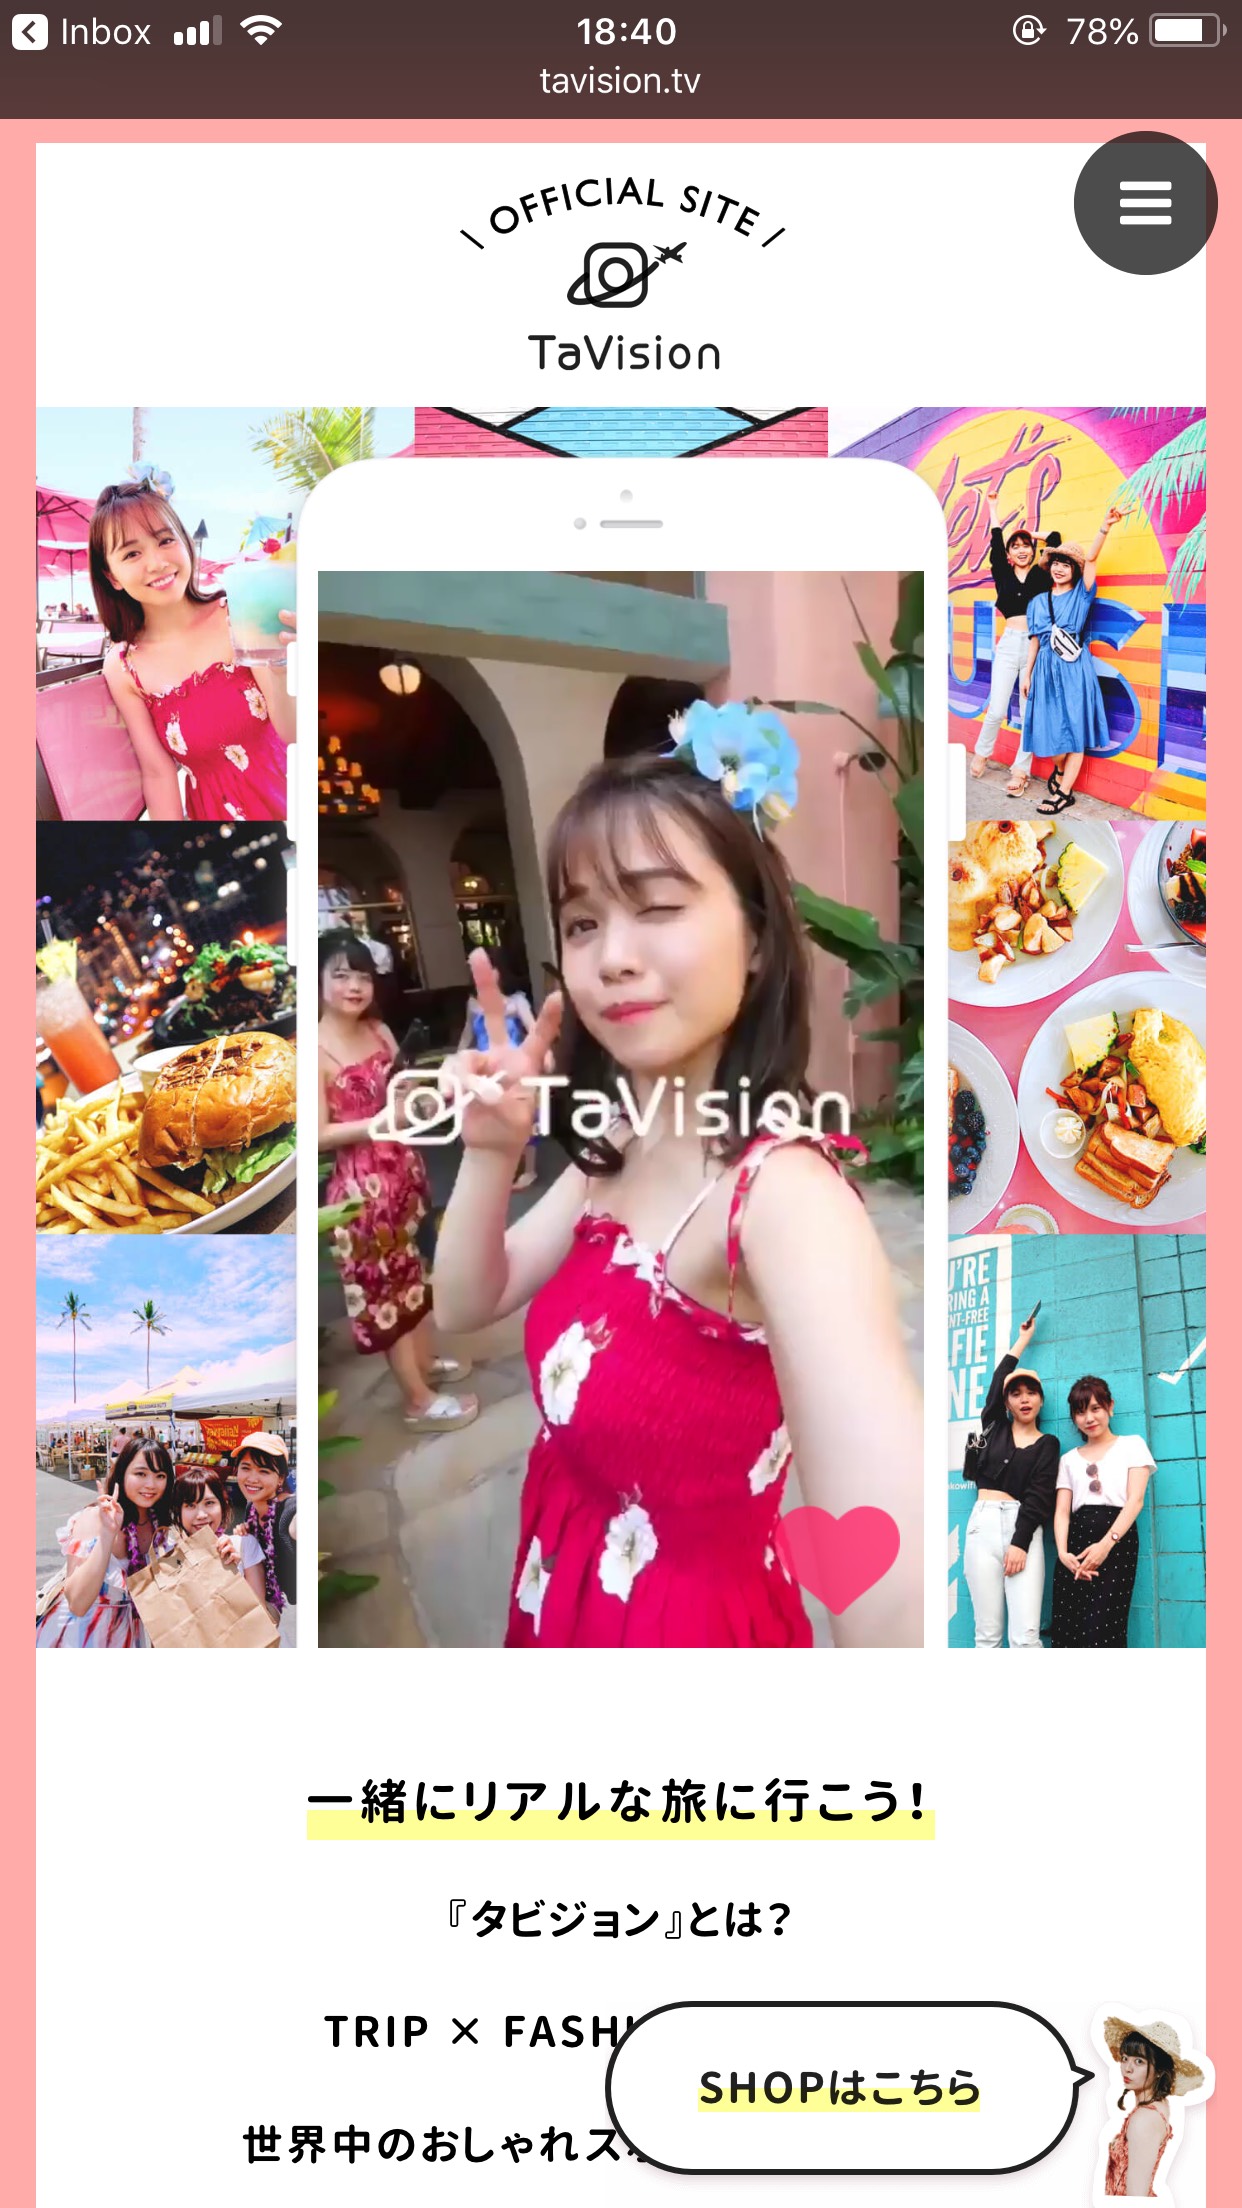 Tavision Official Site – タビジョン公式サイト